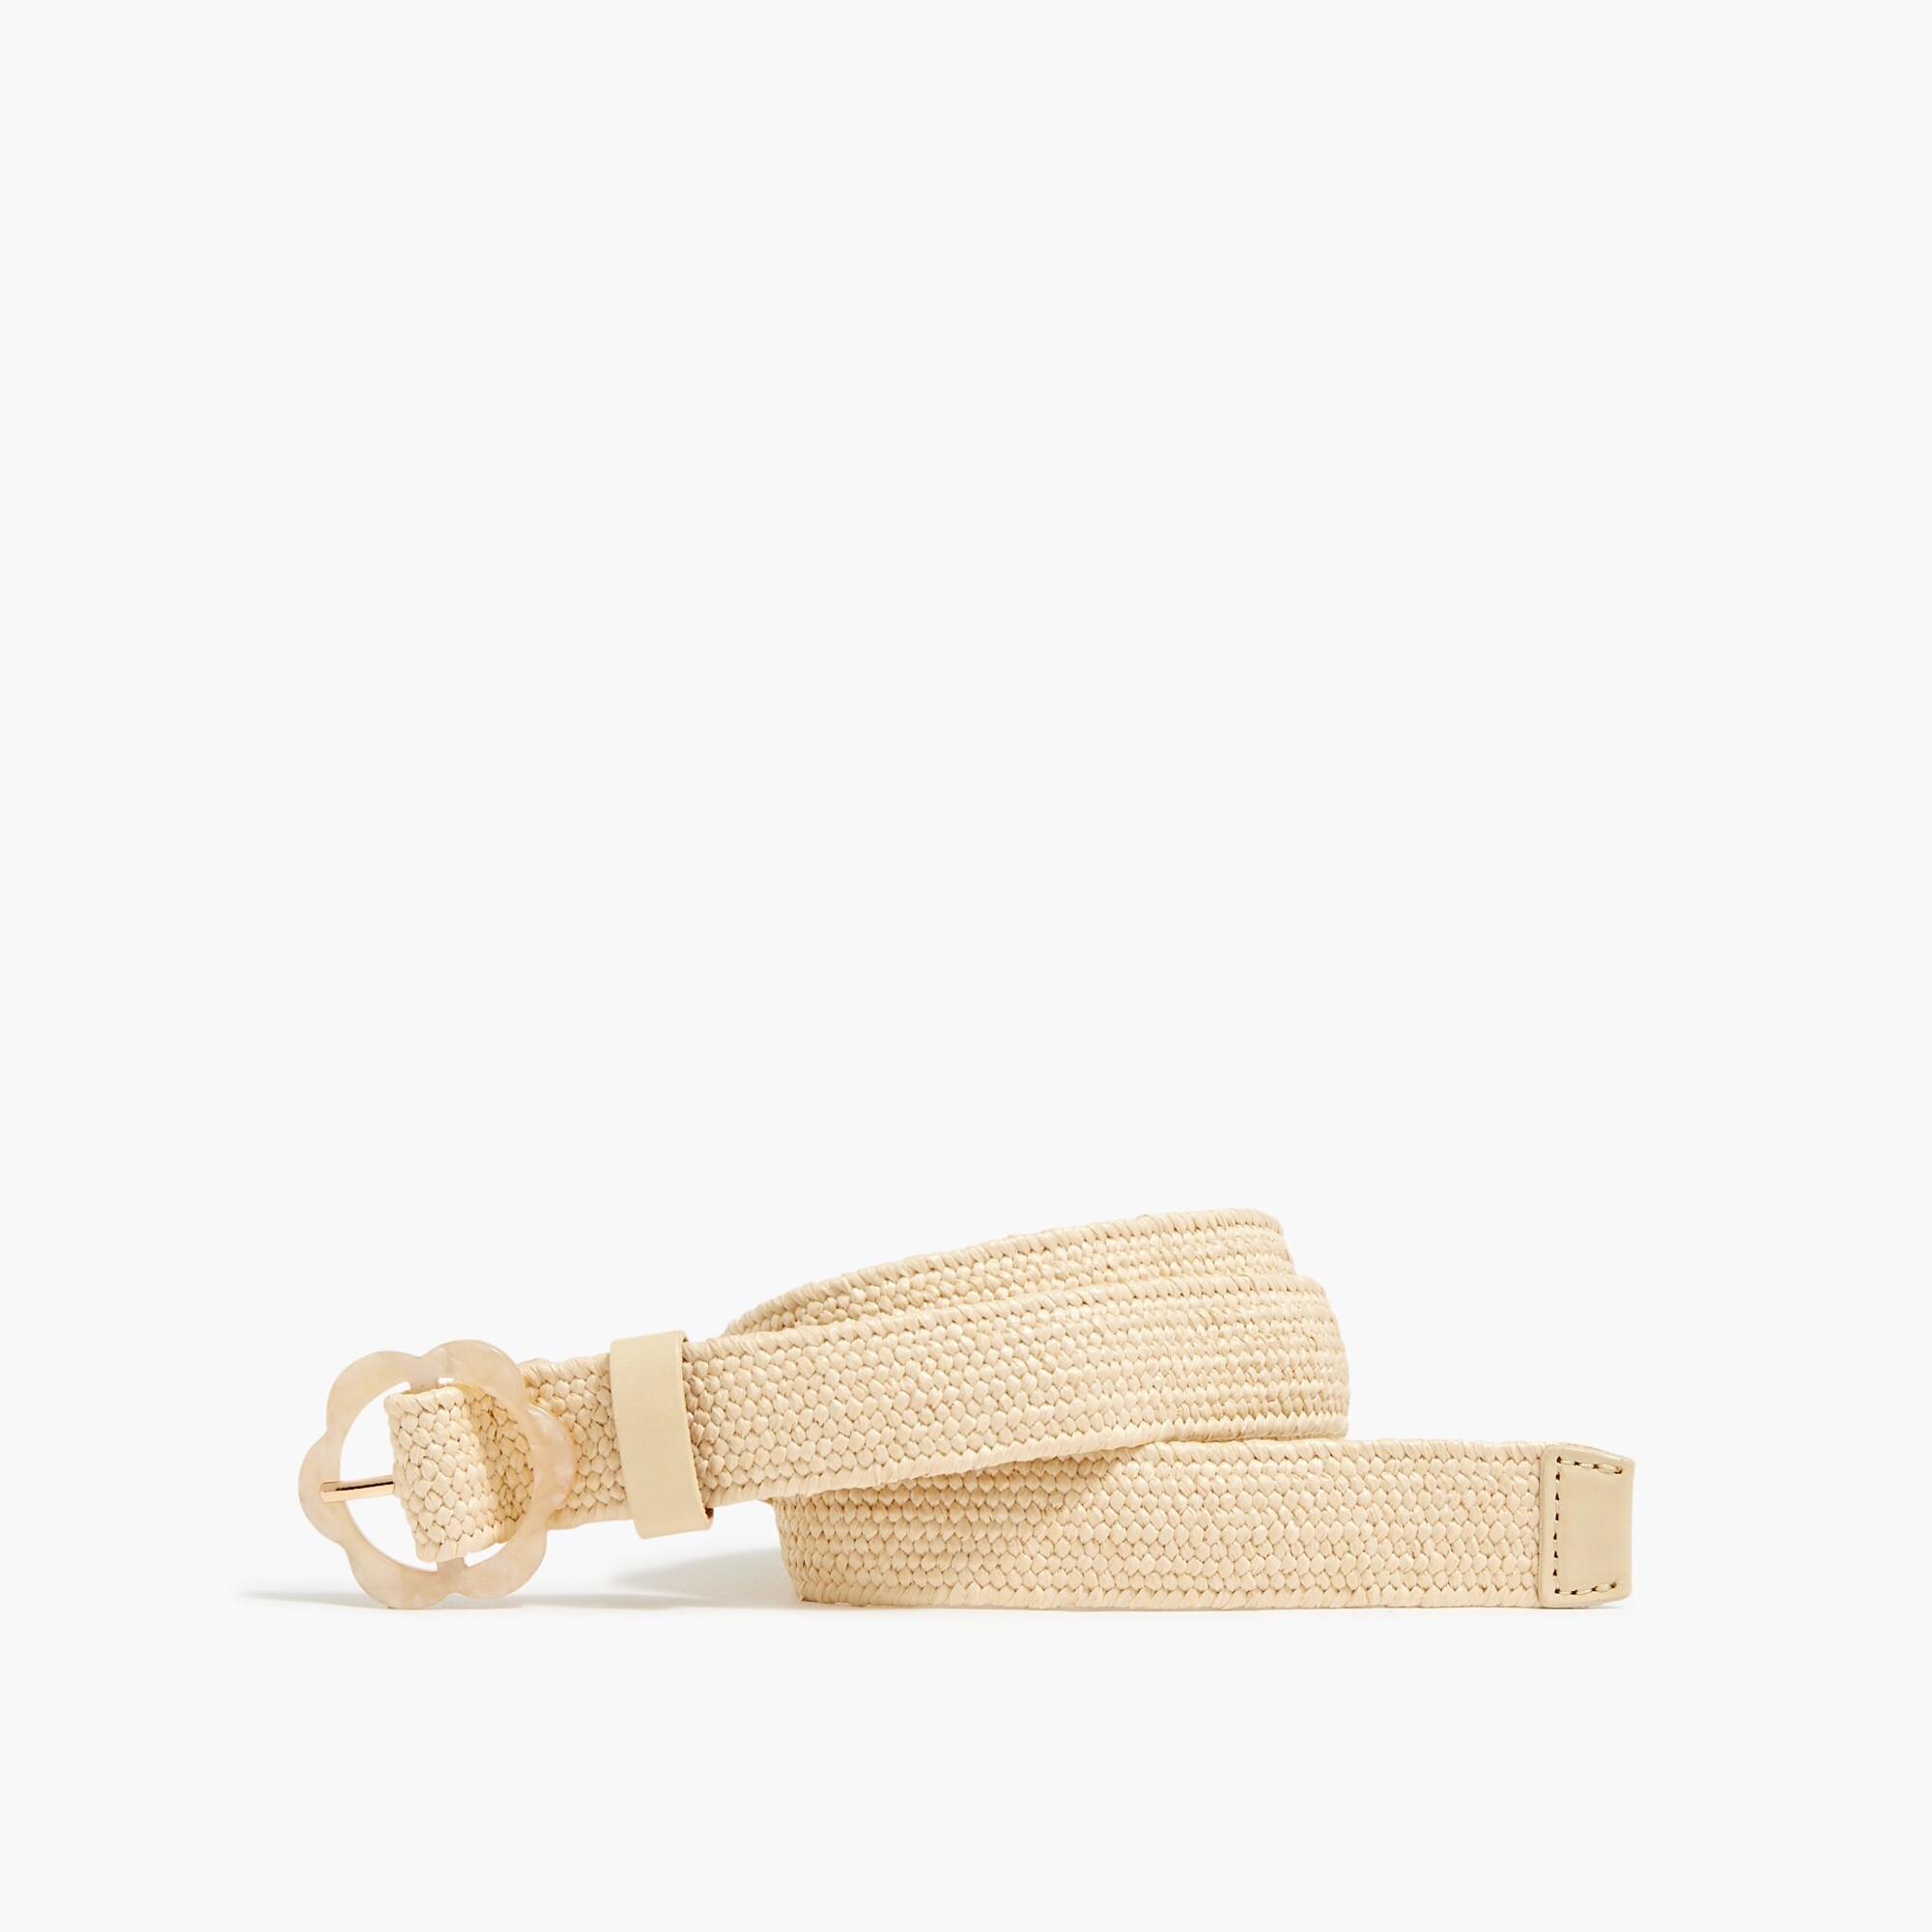  Girls' woven belt with flower buckle